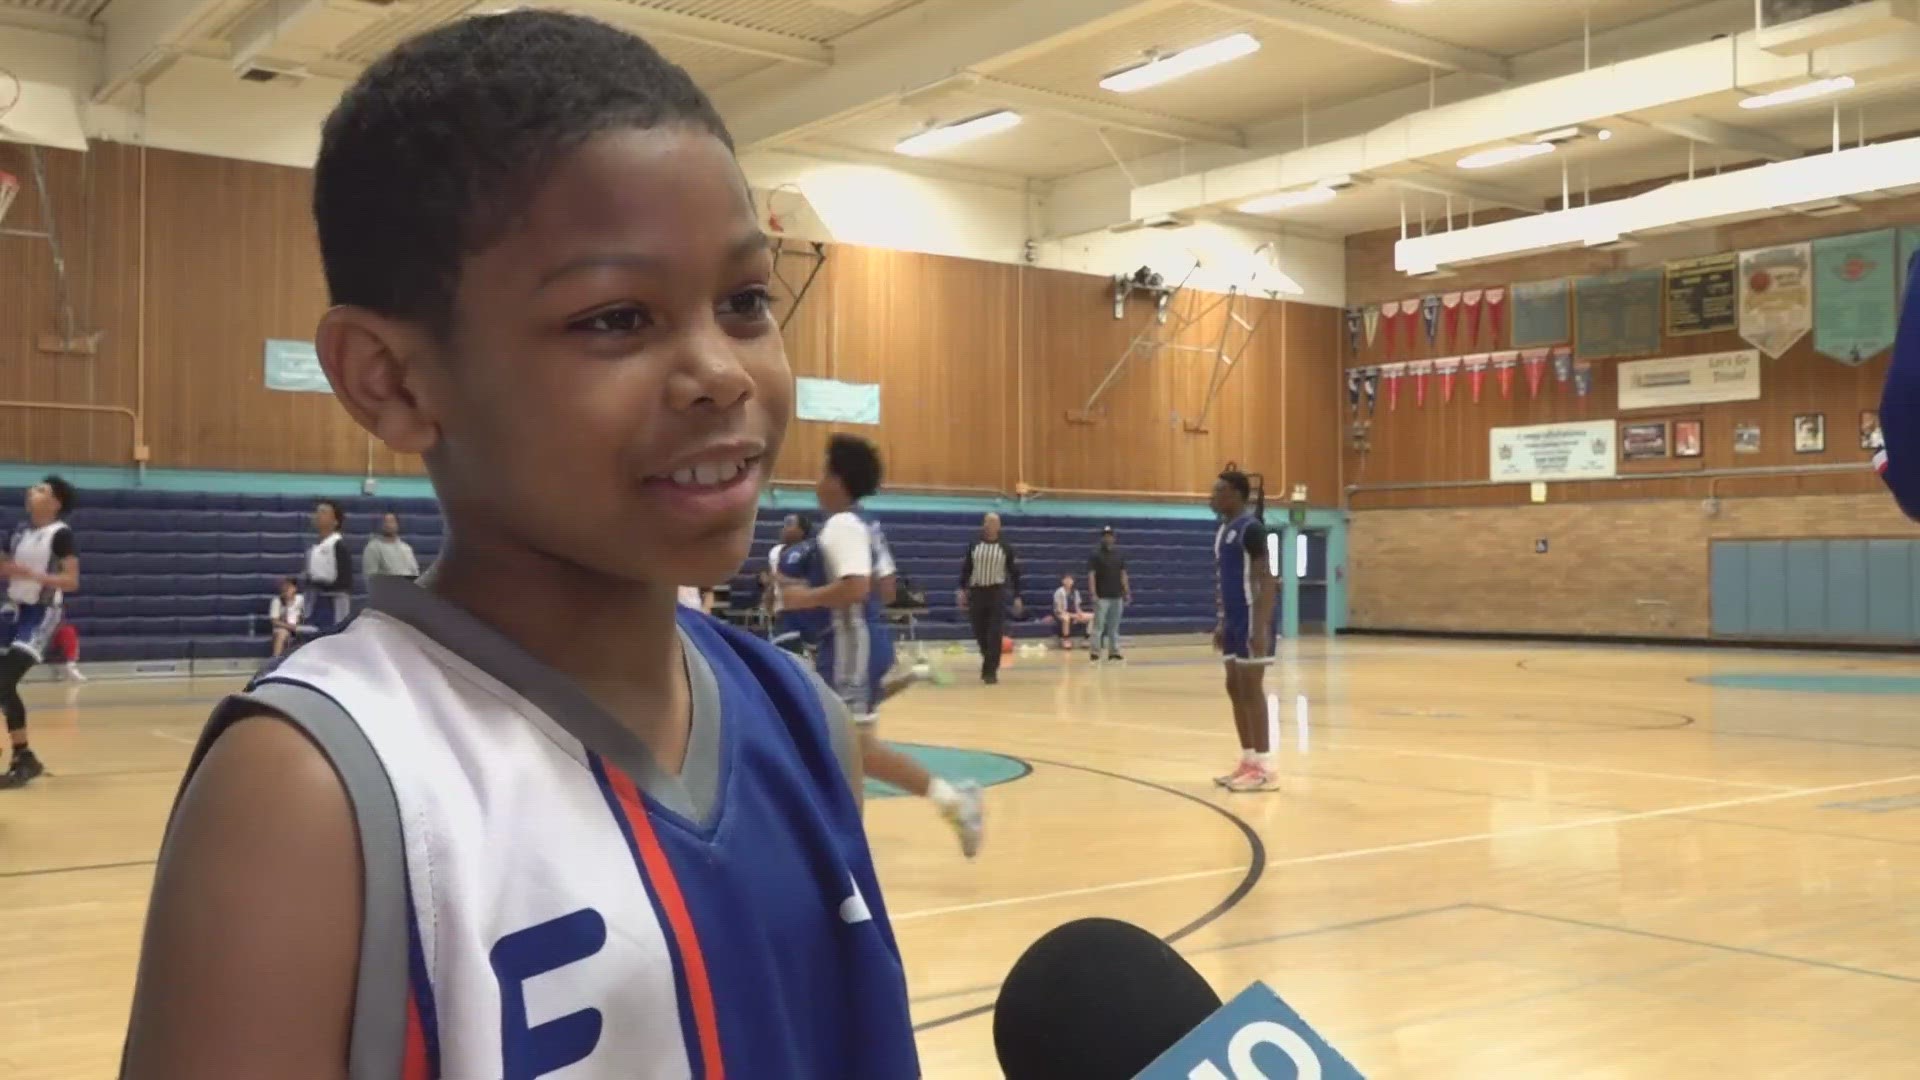 South Sacramento Youth Basketball League teaches kids life skills